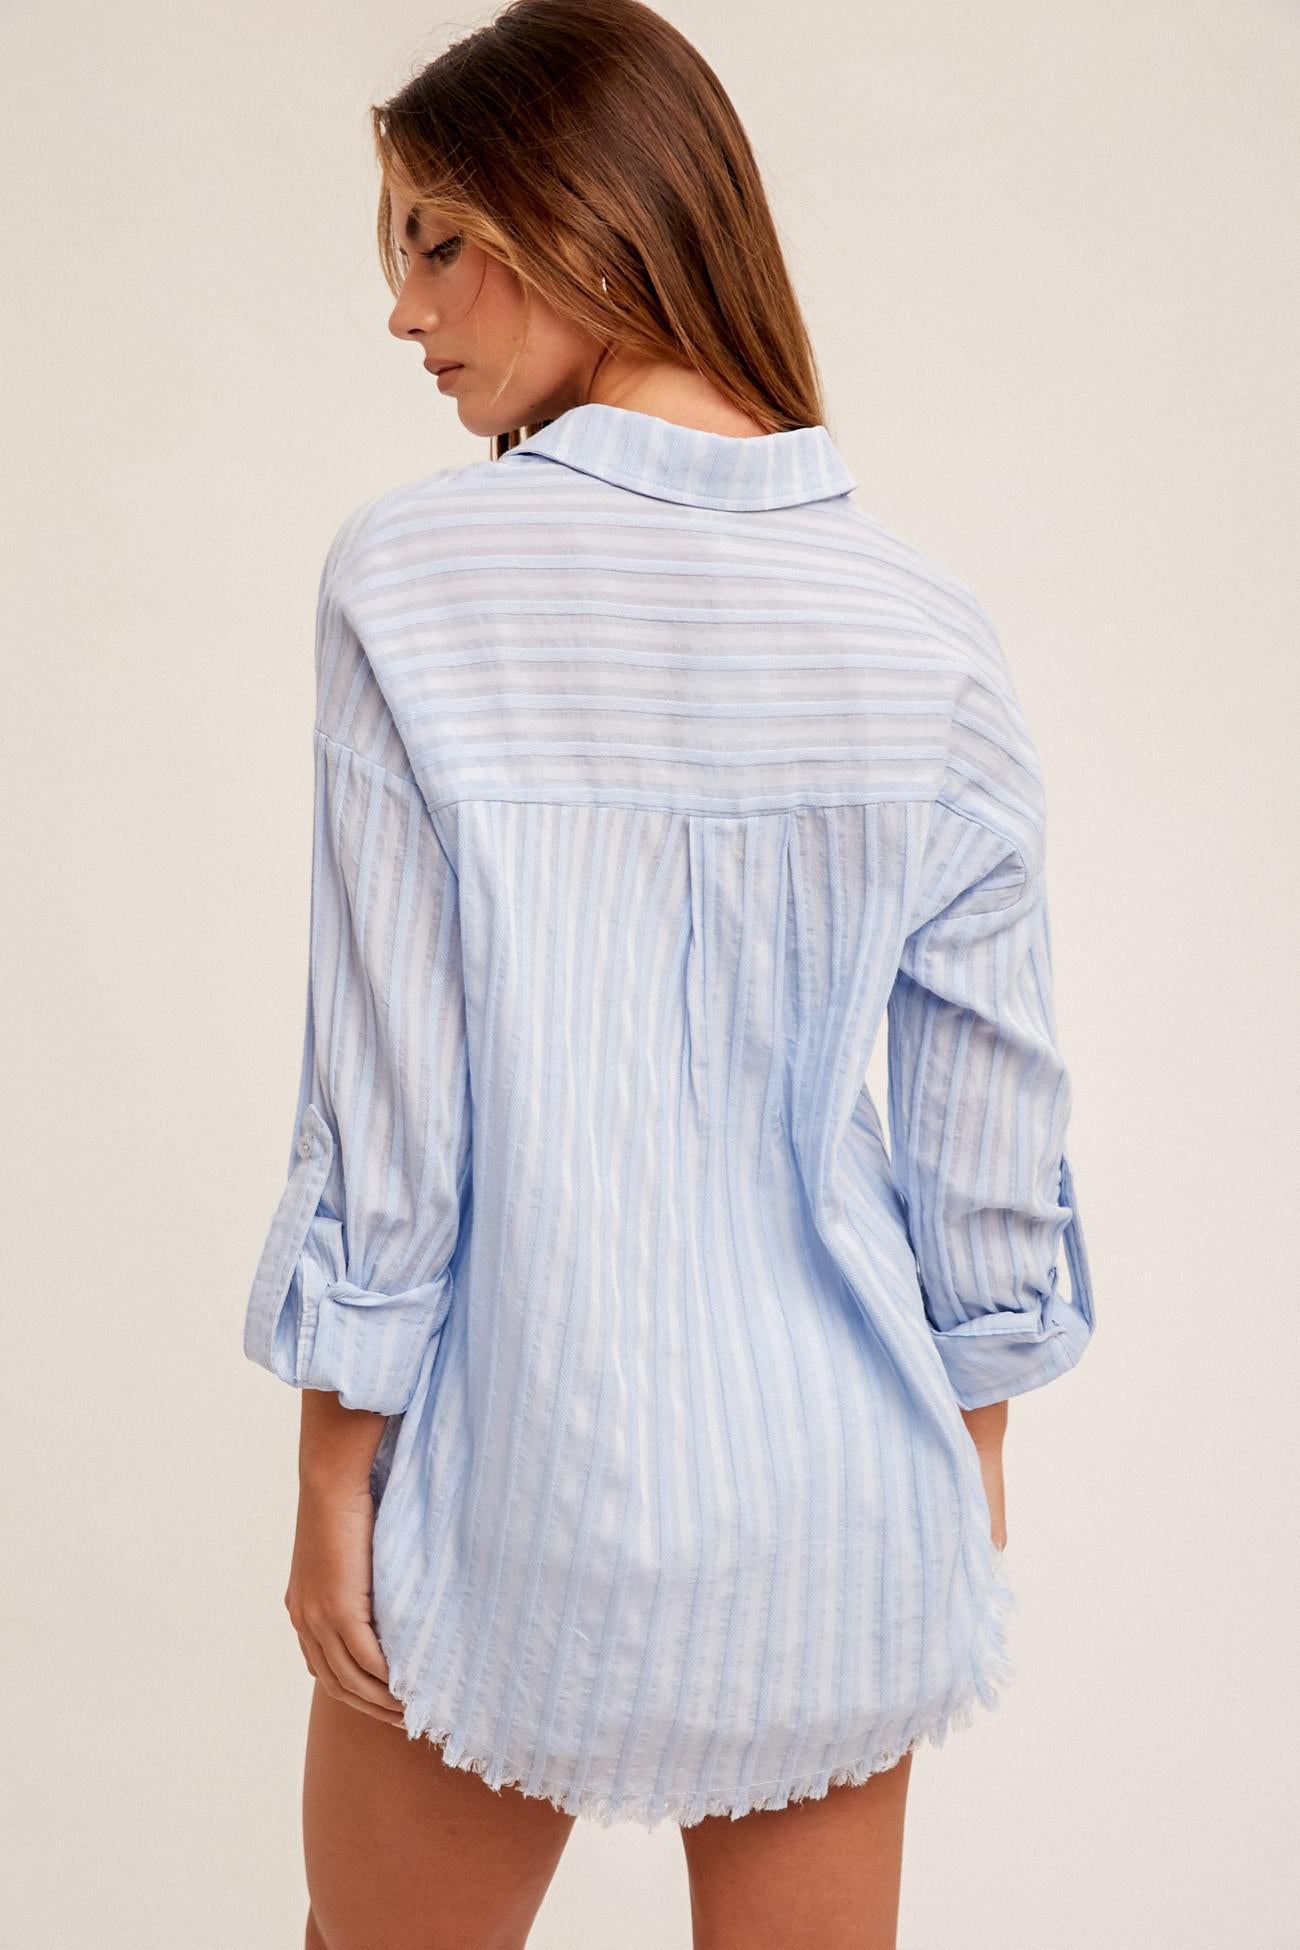 Striped Textured Fray Button Down Shirt